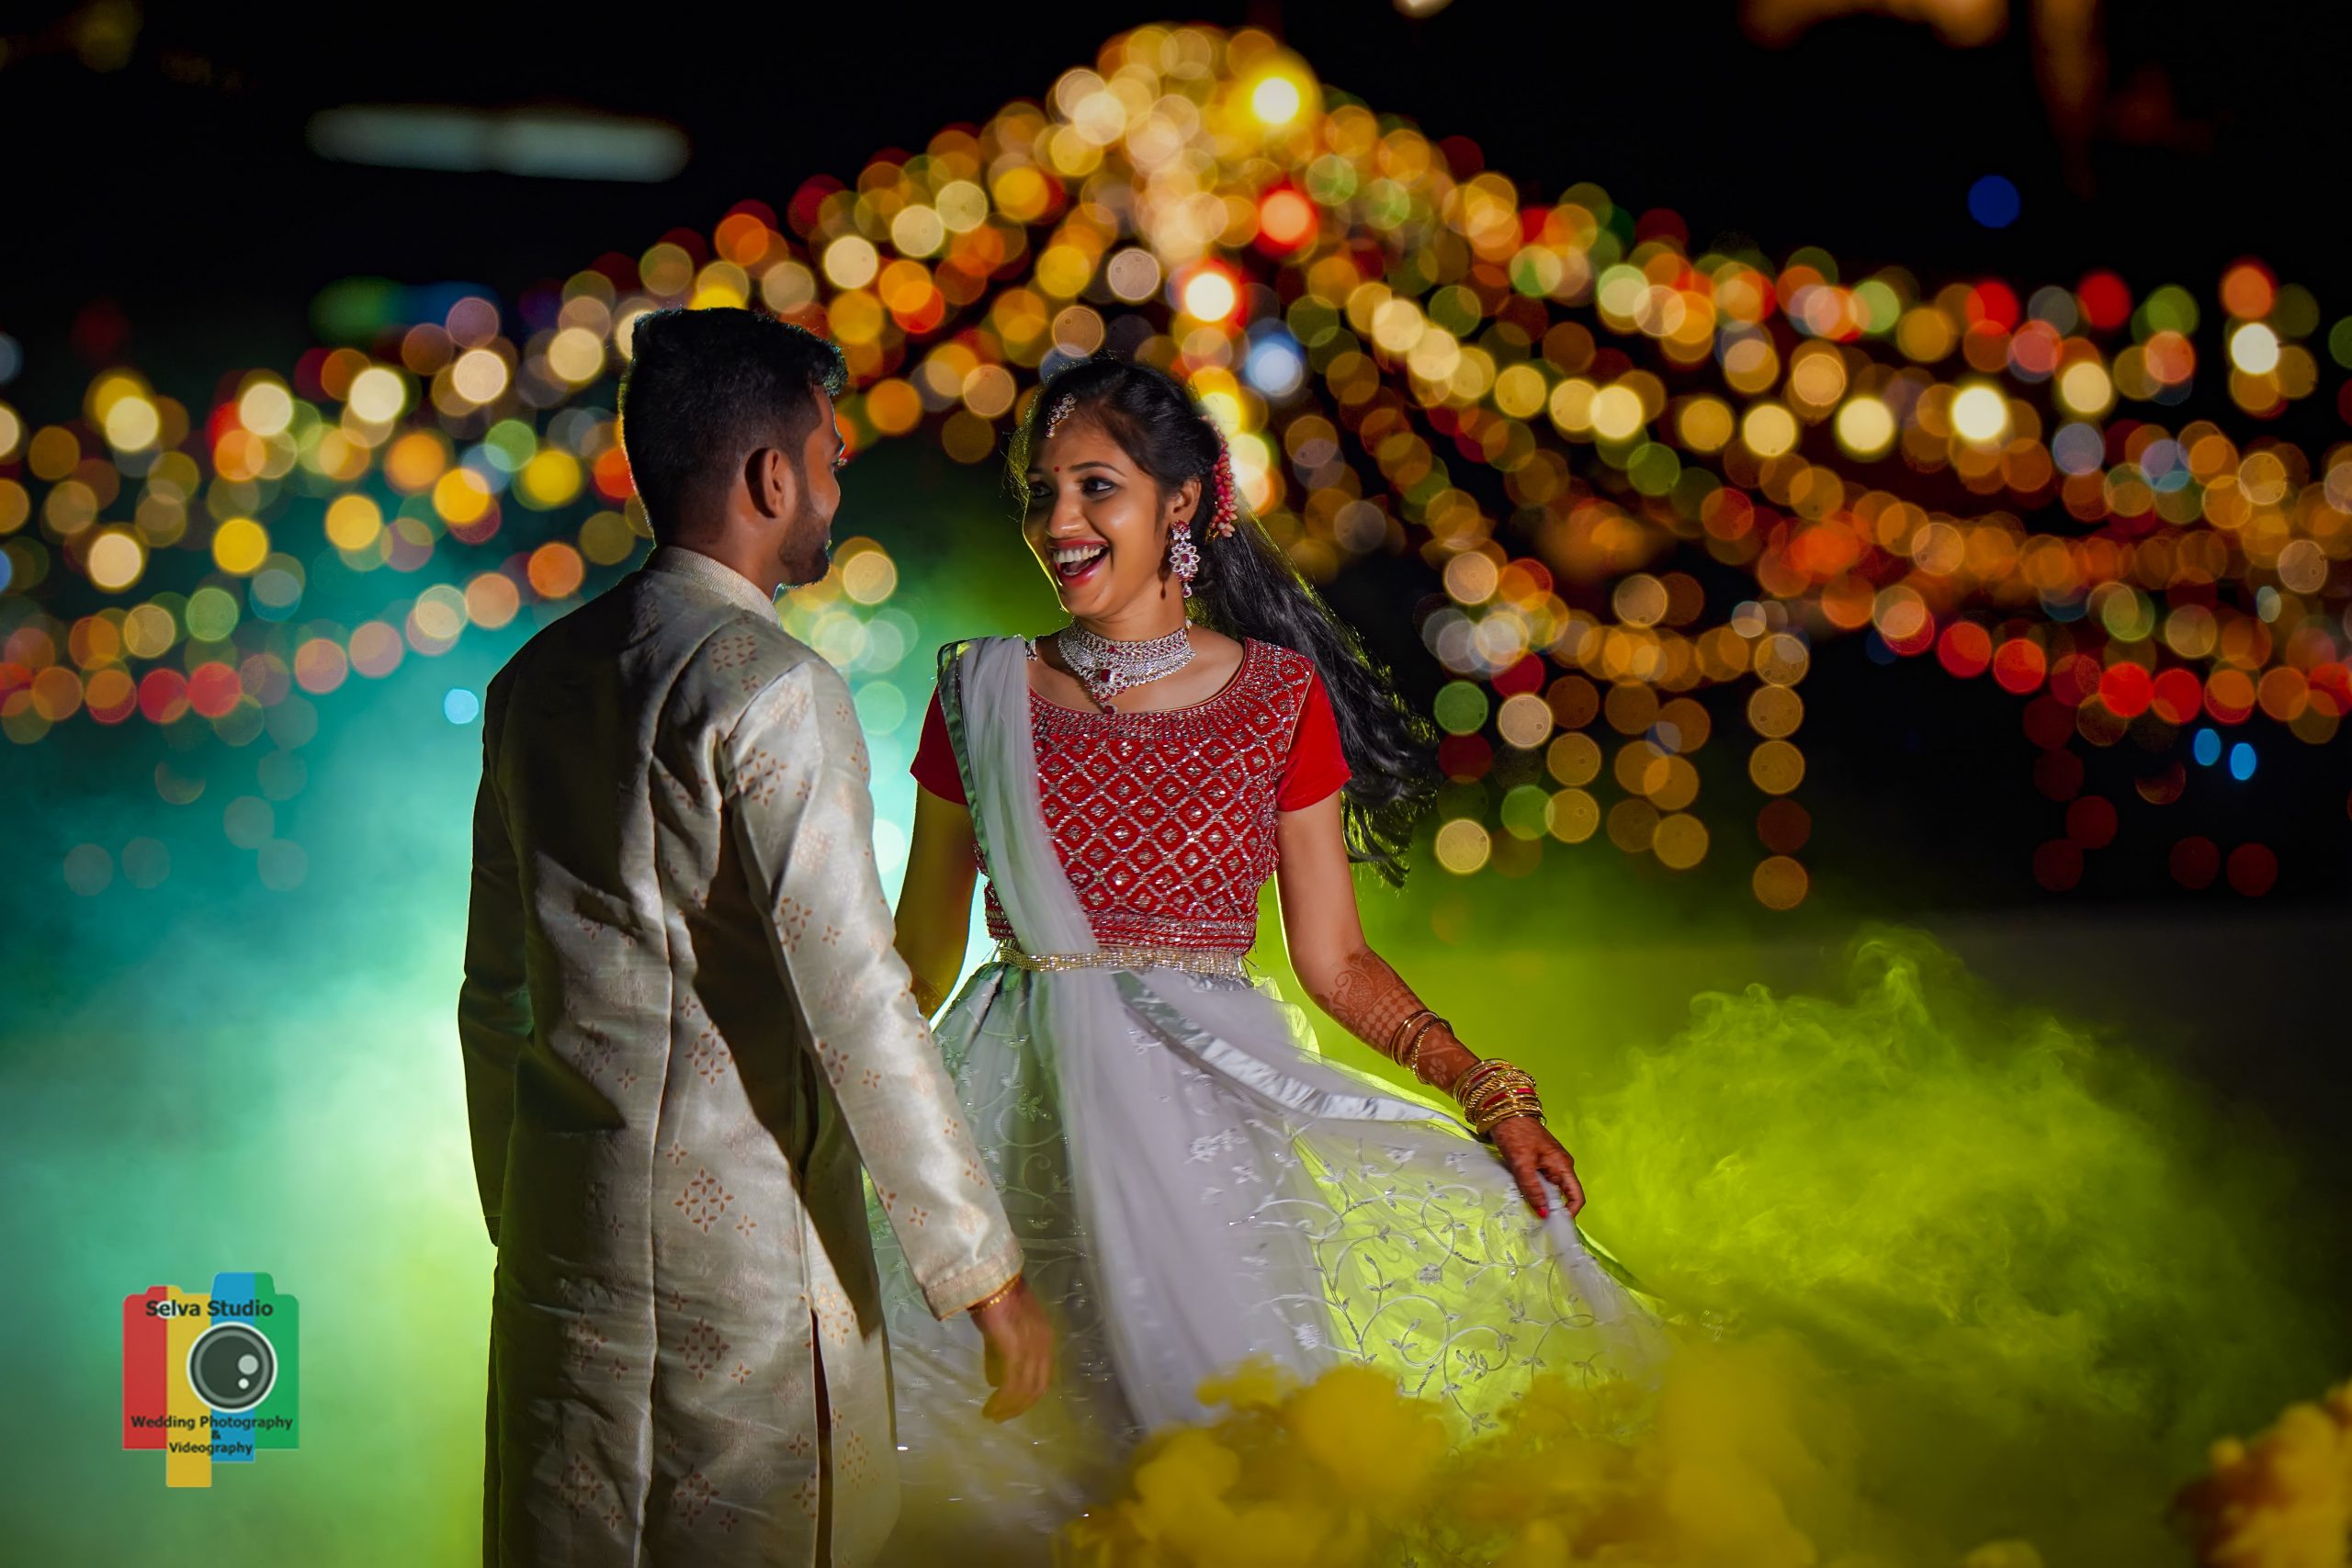 Selva Wedding Photography provides candid  wedding photography  and traditional wedding photography